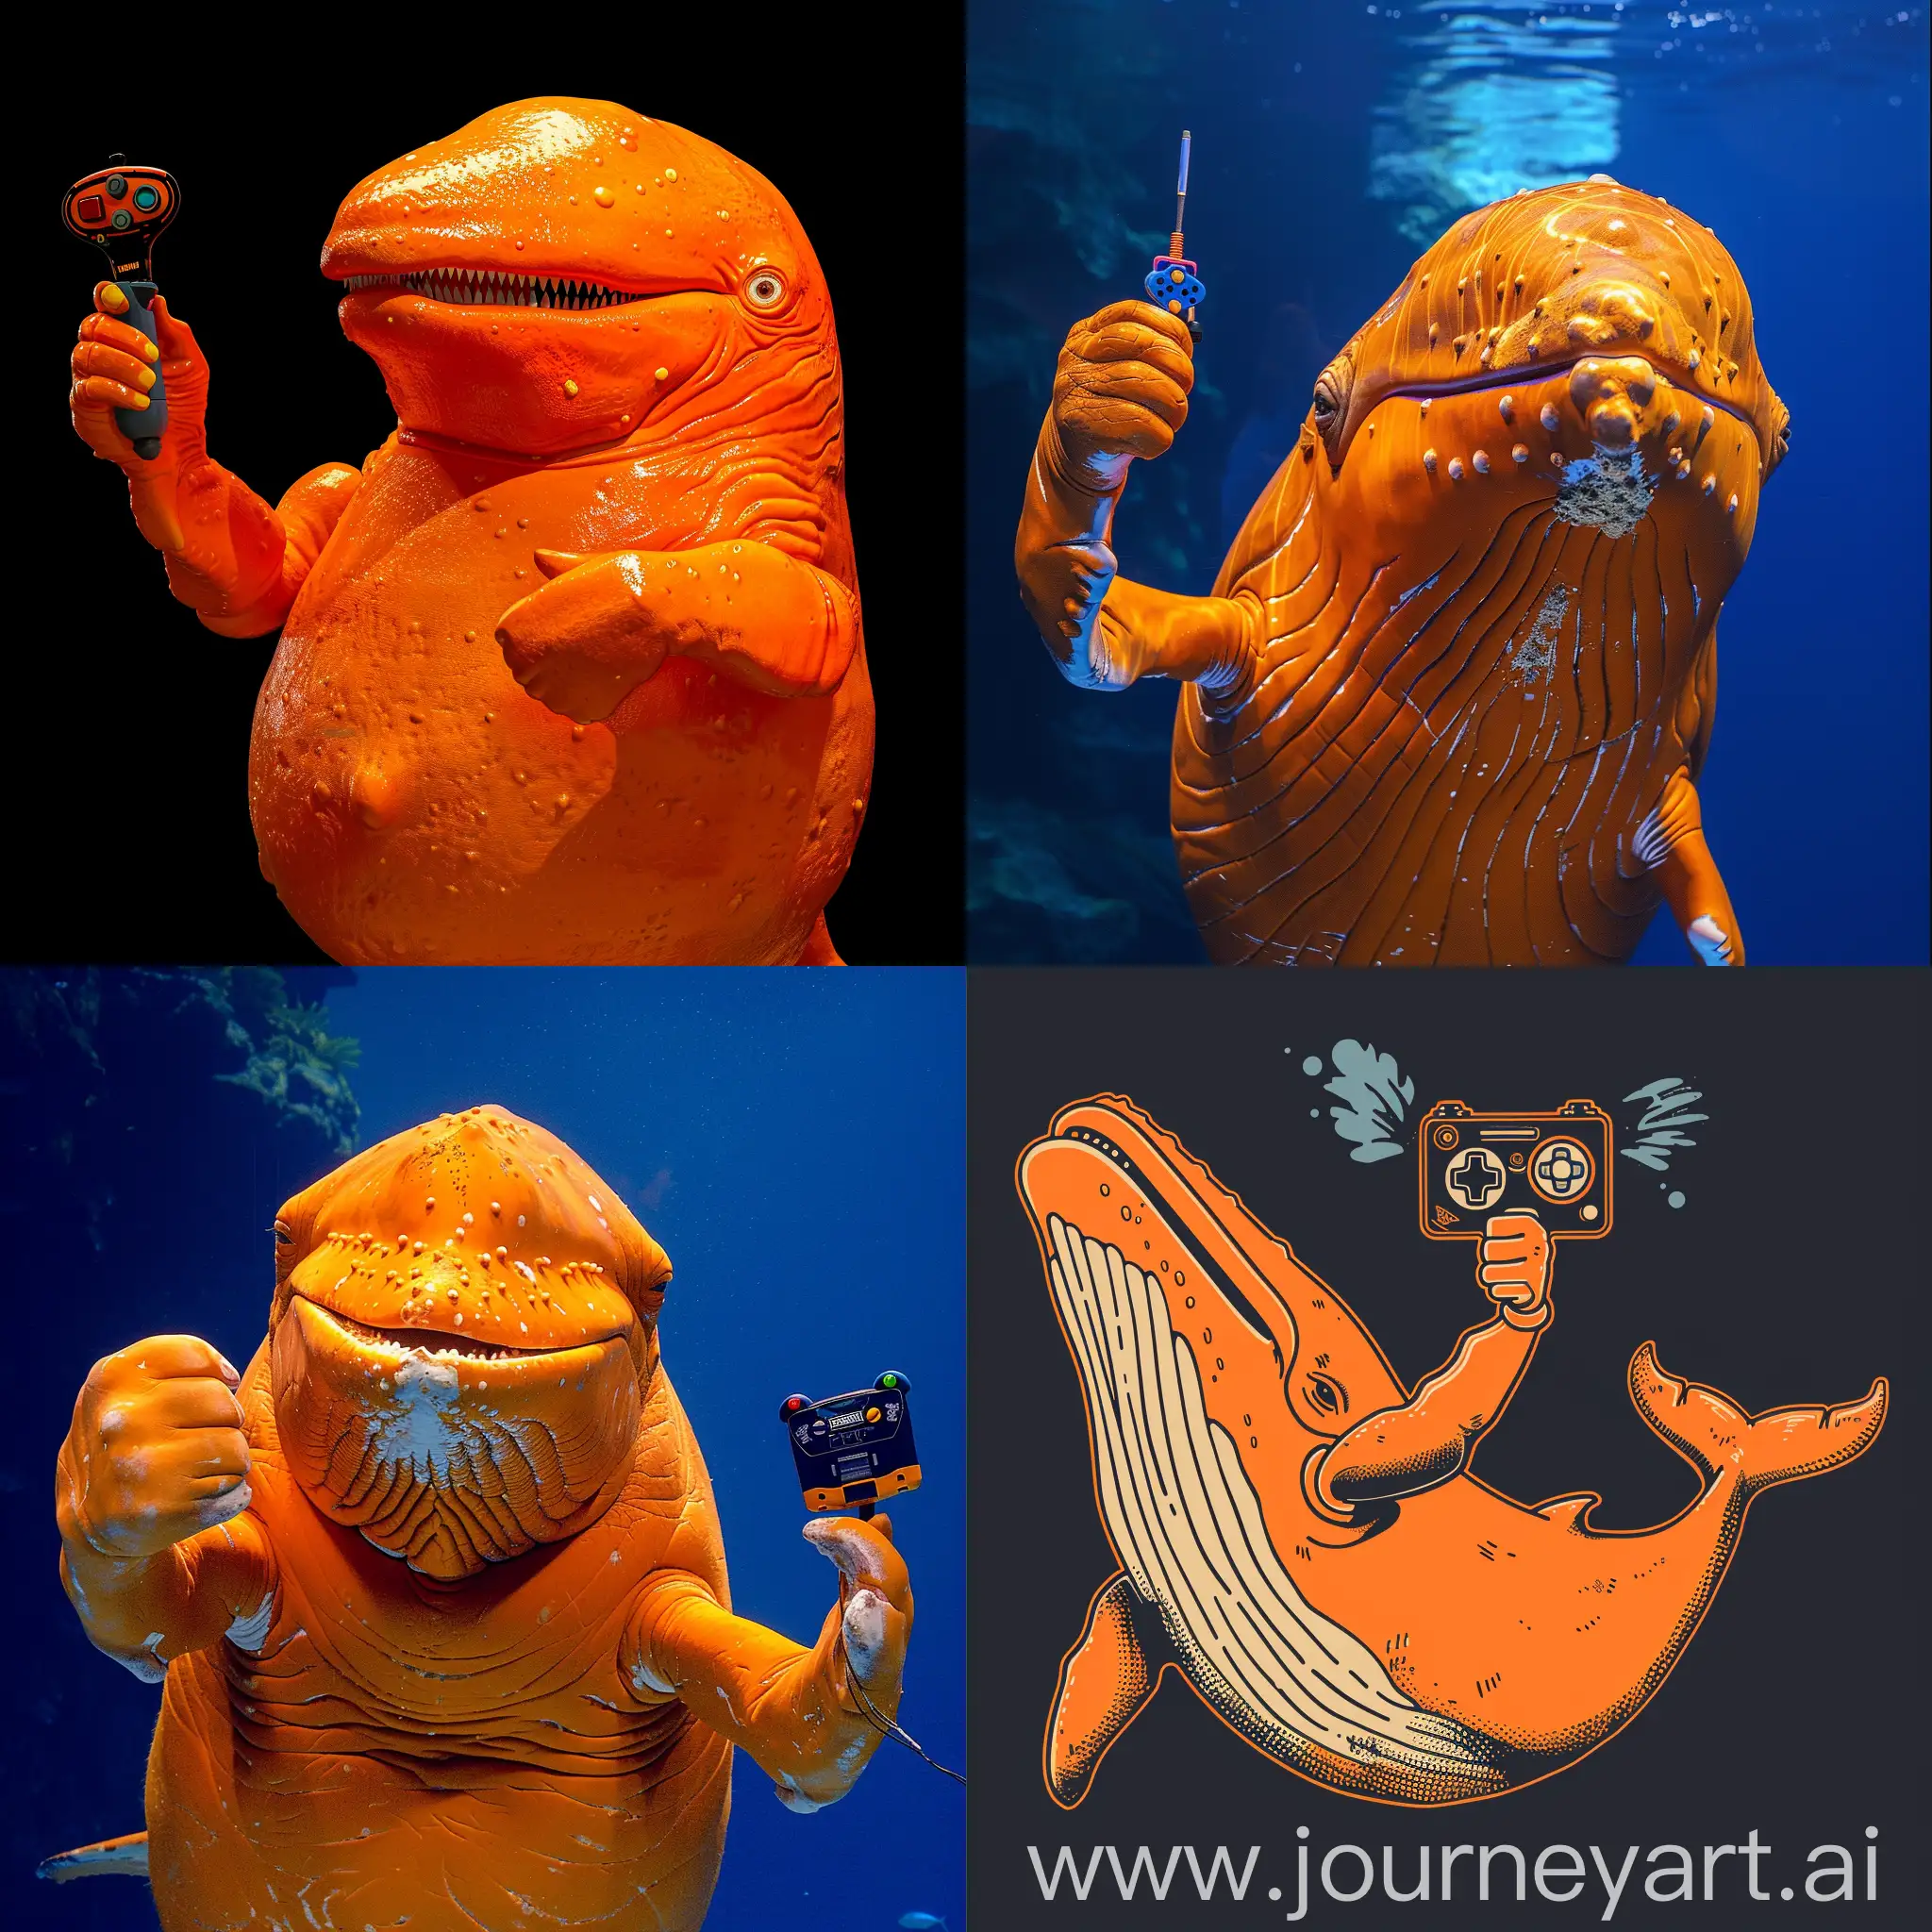 Smiling-Orange-Whale-Holding-Joystick-and-Waving-to-Camera